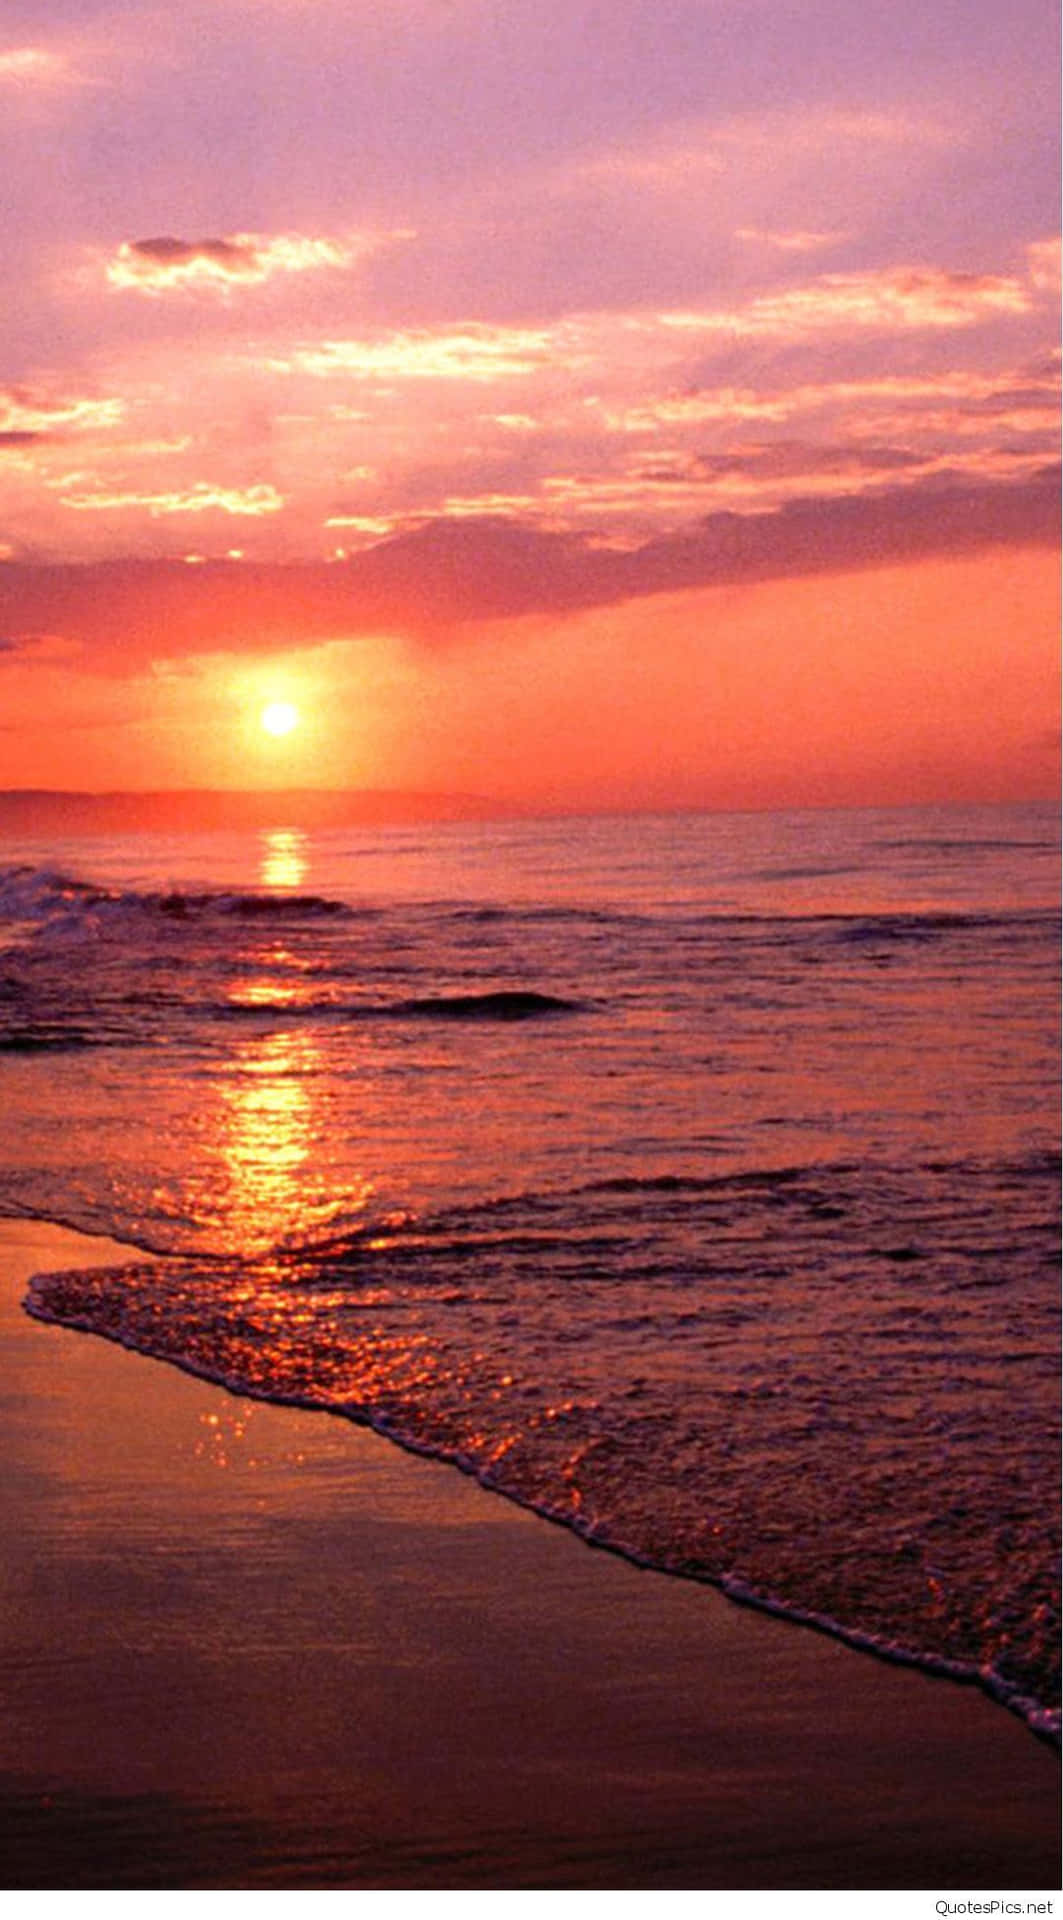 ocean sunset backgrounds iphone